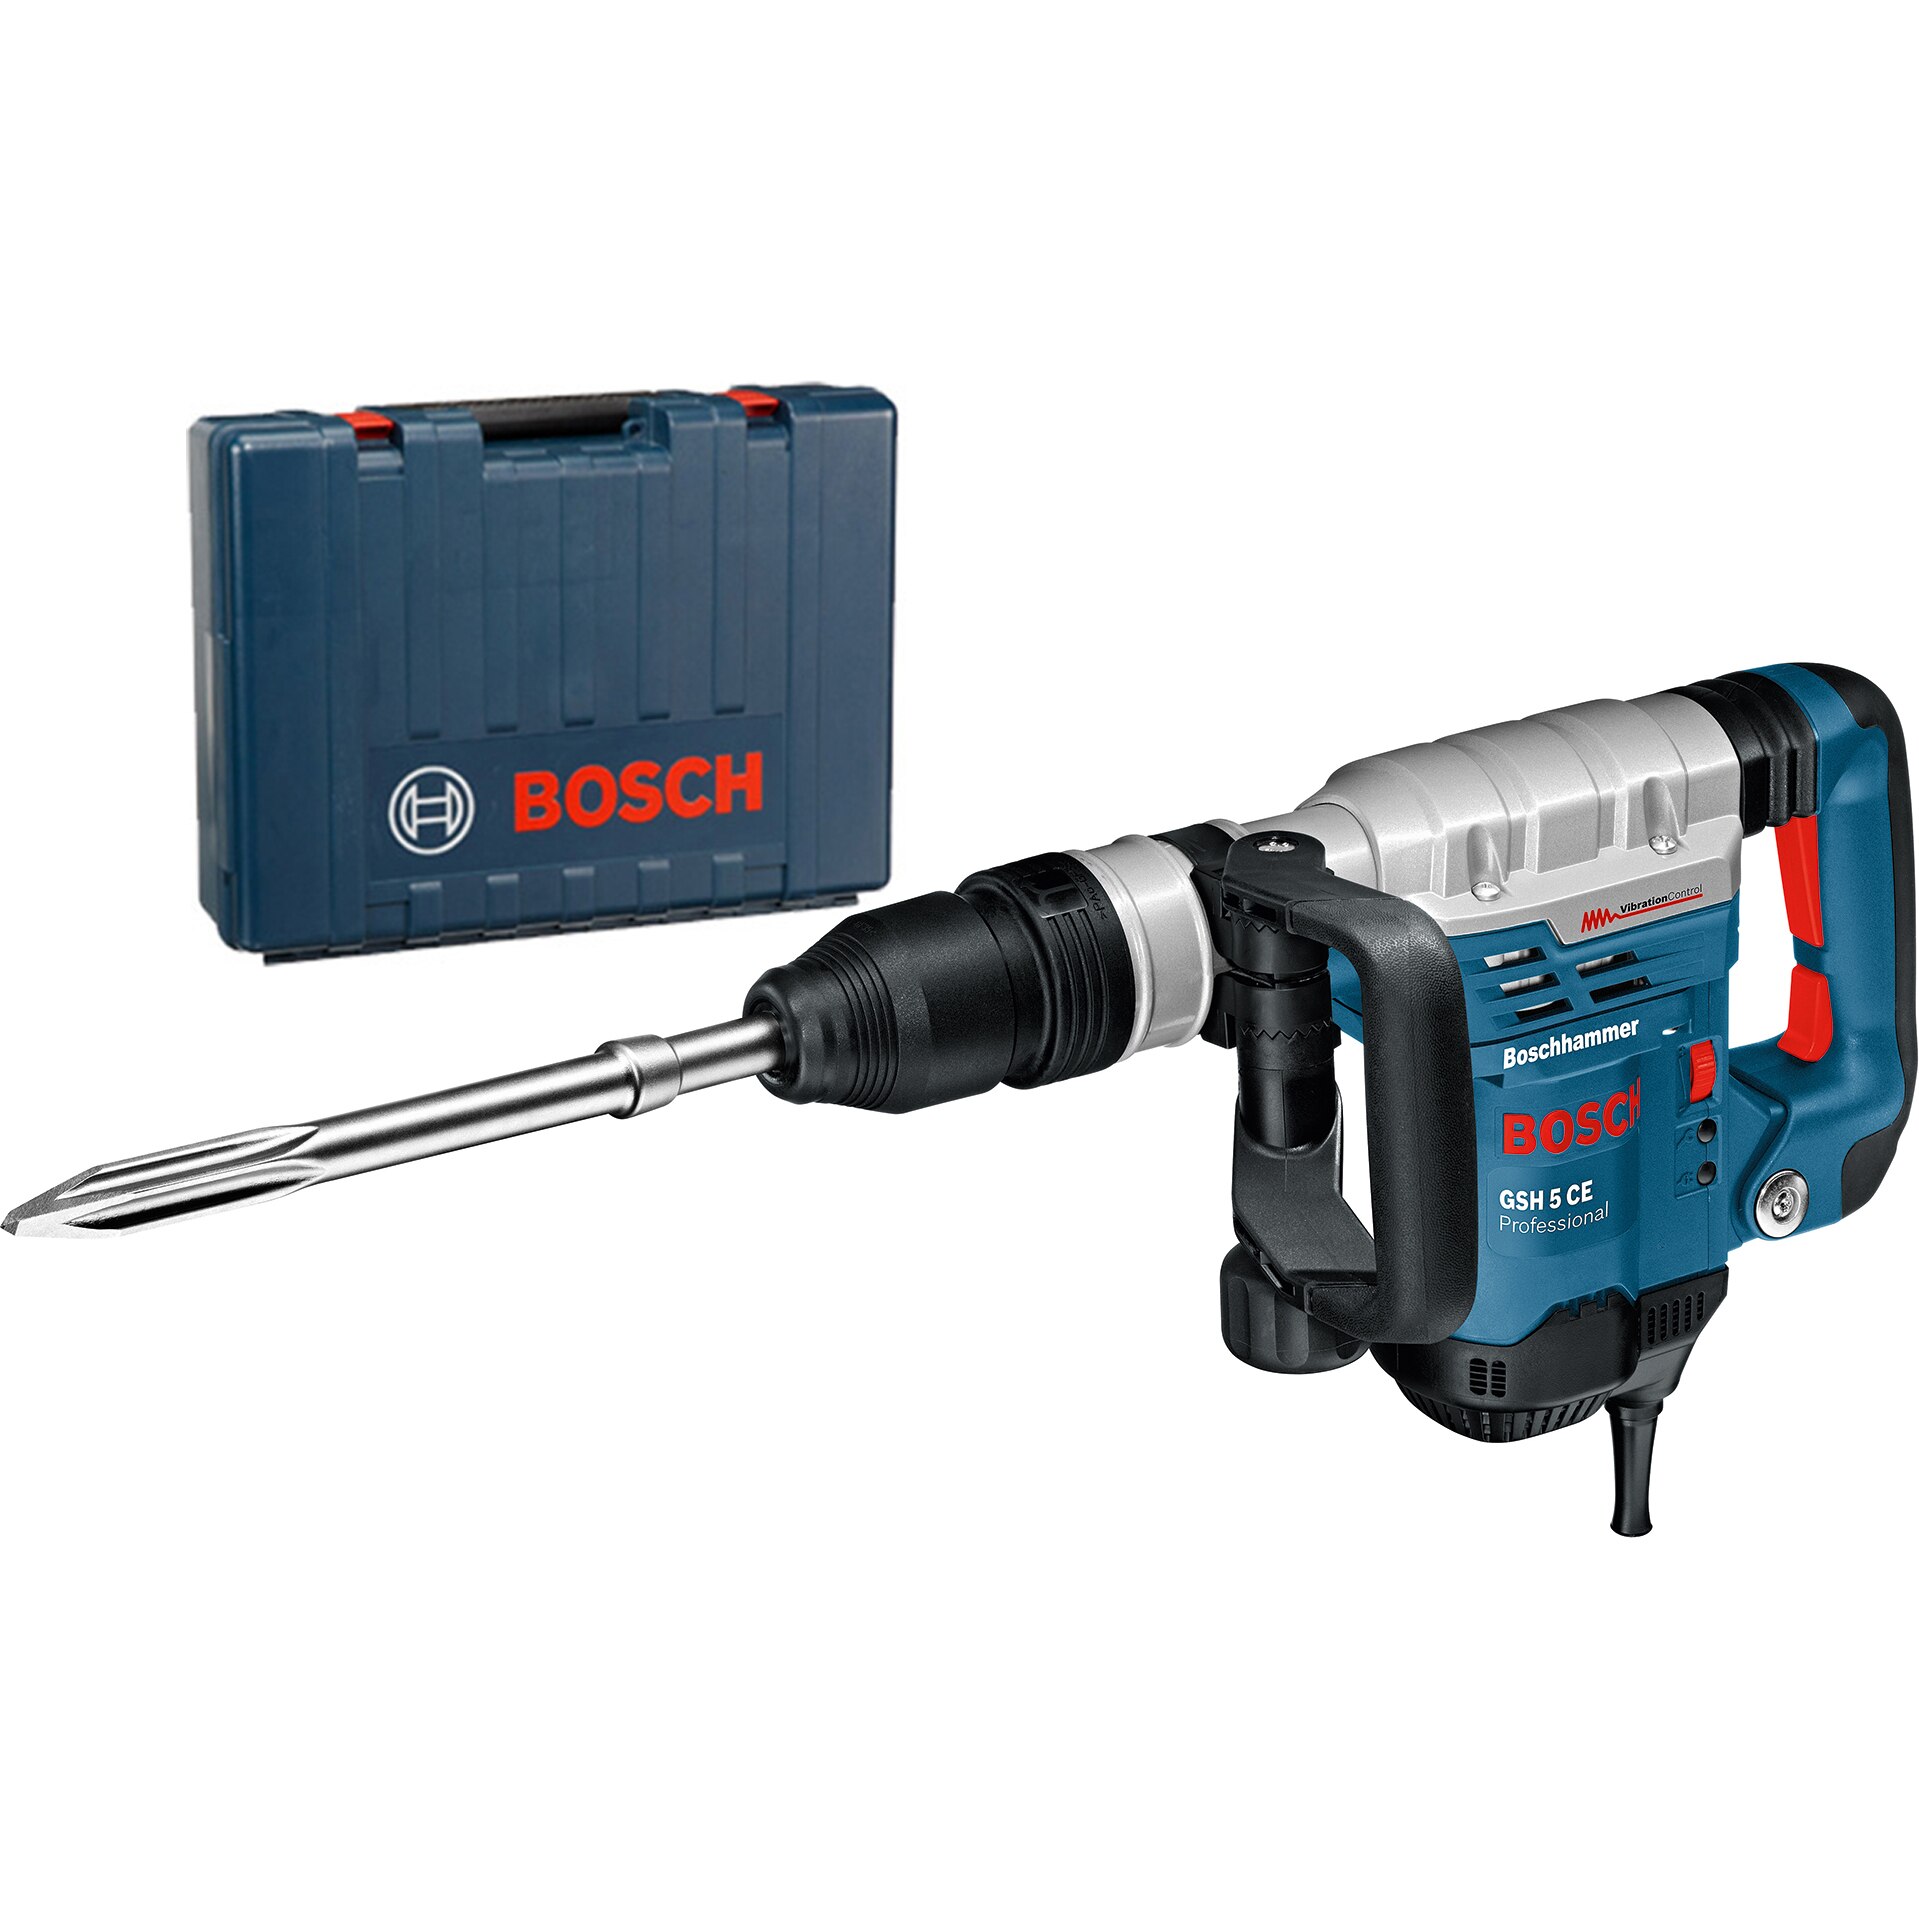 Fotografie Ciocan demolator SDS-max Bosch Professional GSH 5 CE, 1150W, 2900ppm, 8.3 J, Valiza transport